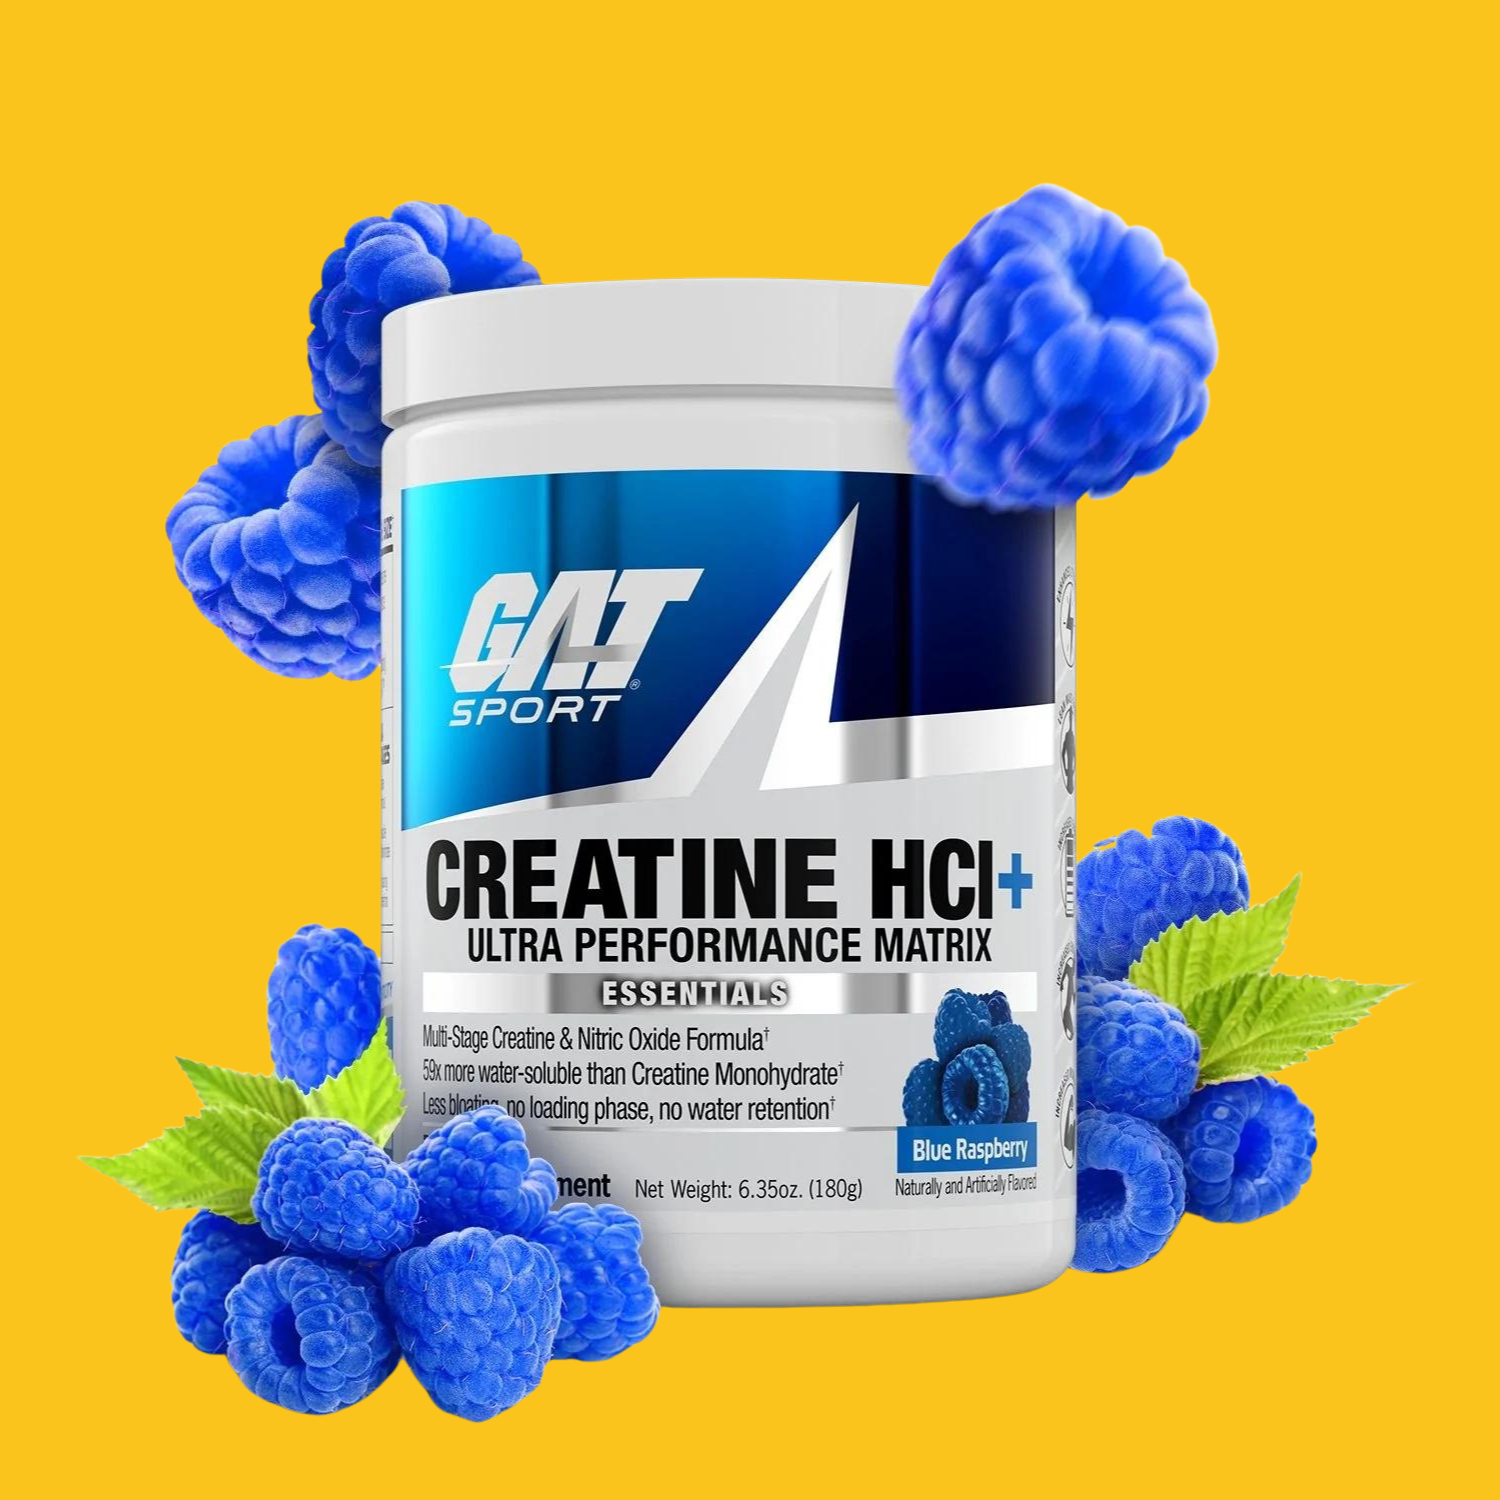 GAT Sport Creatine HCI+, N03-T® Nitrate Matrix